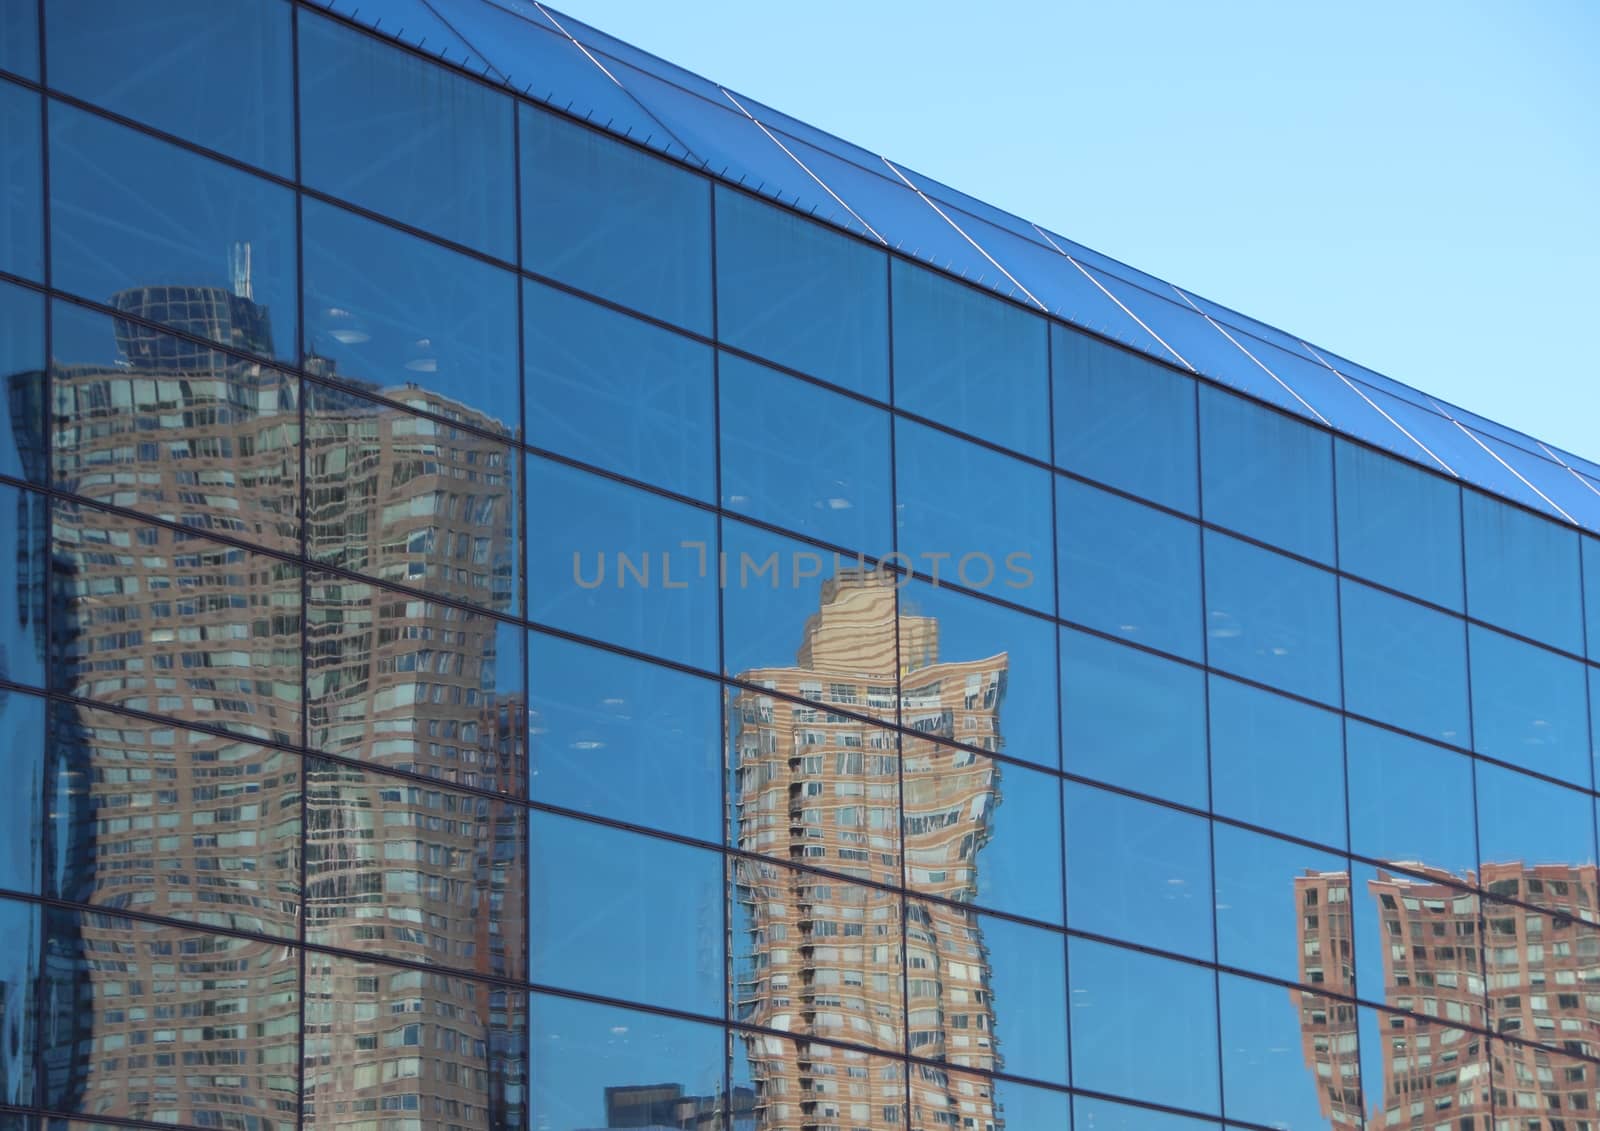 Reflection of Skyscraper in Blue Window Facade by HoleInTheBox